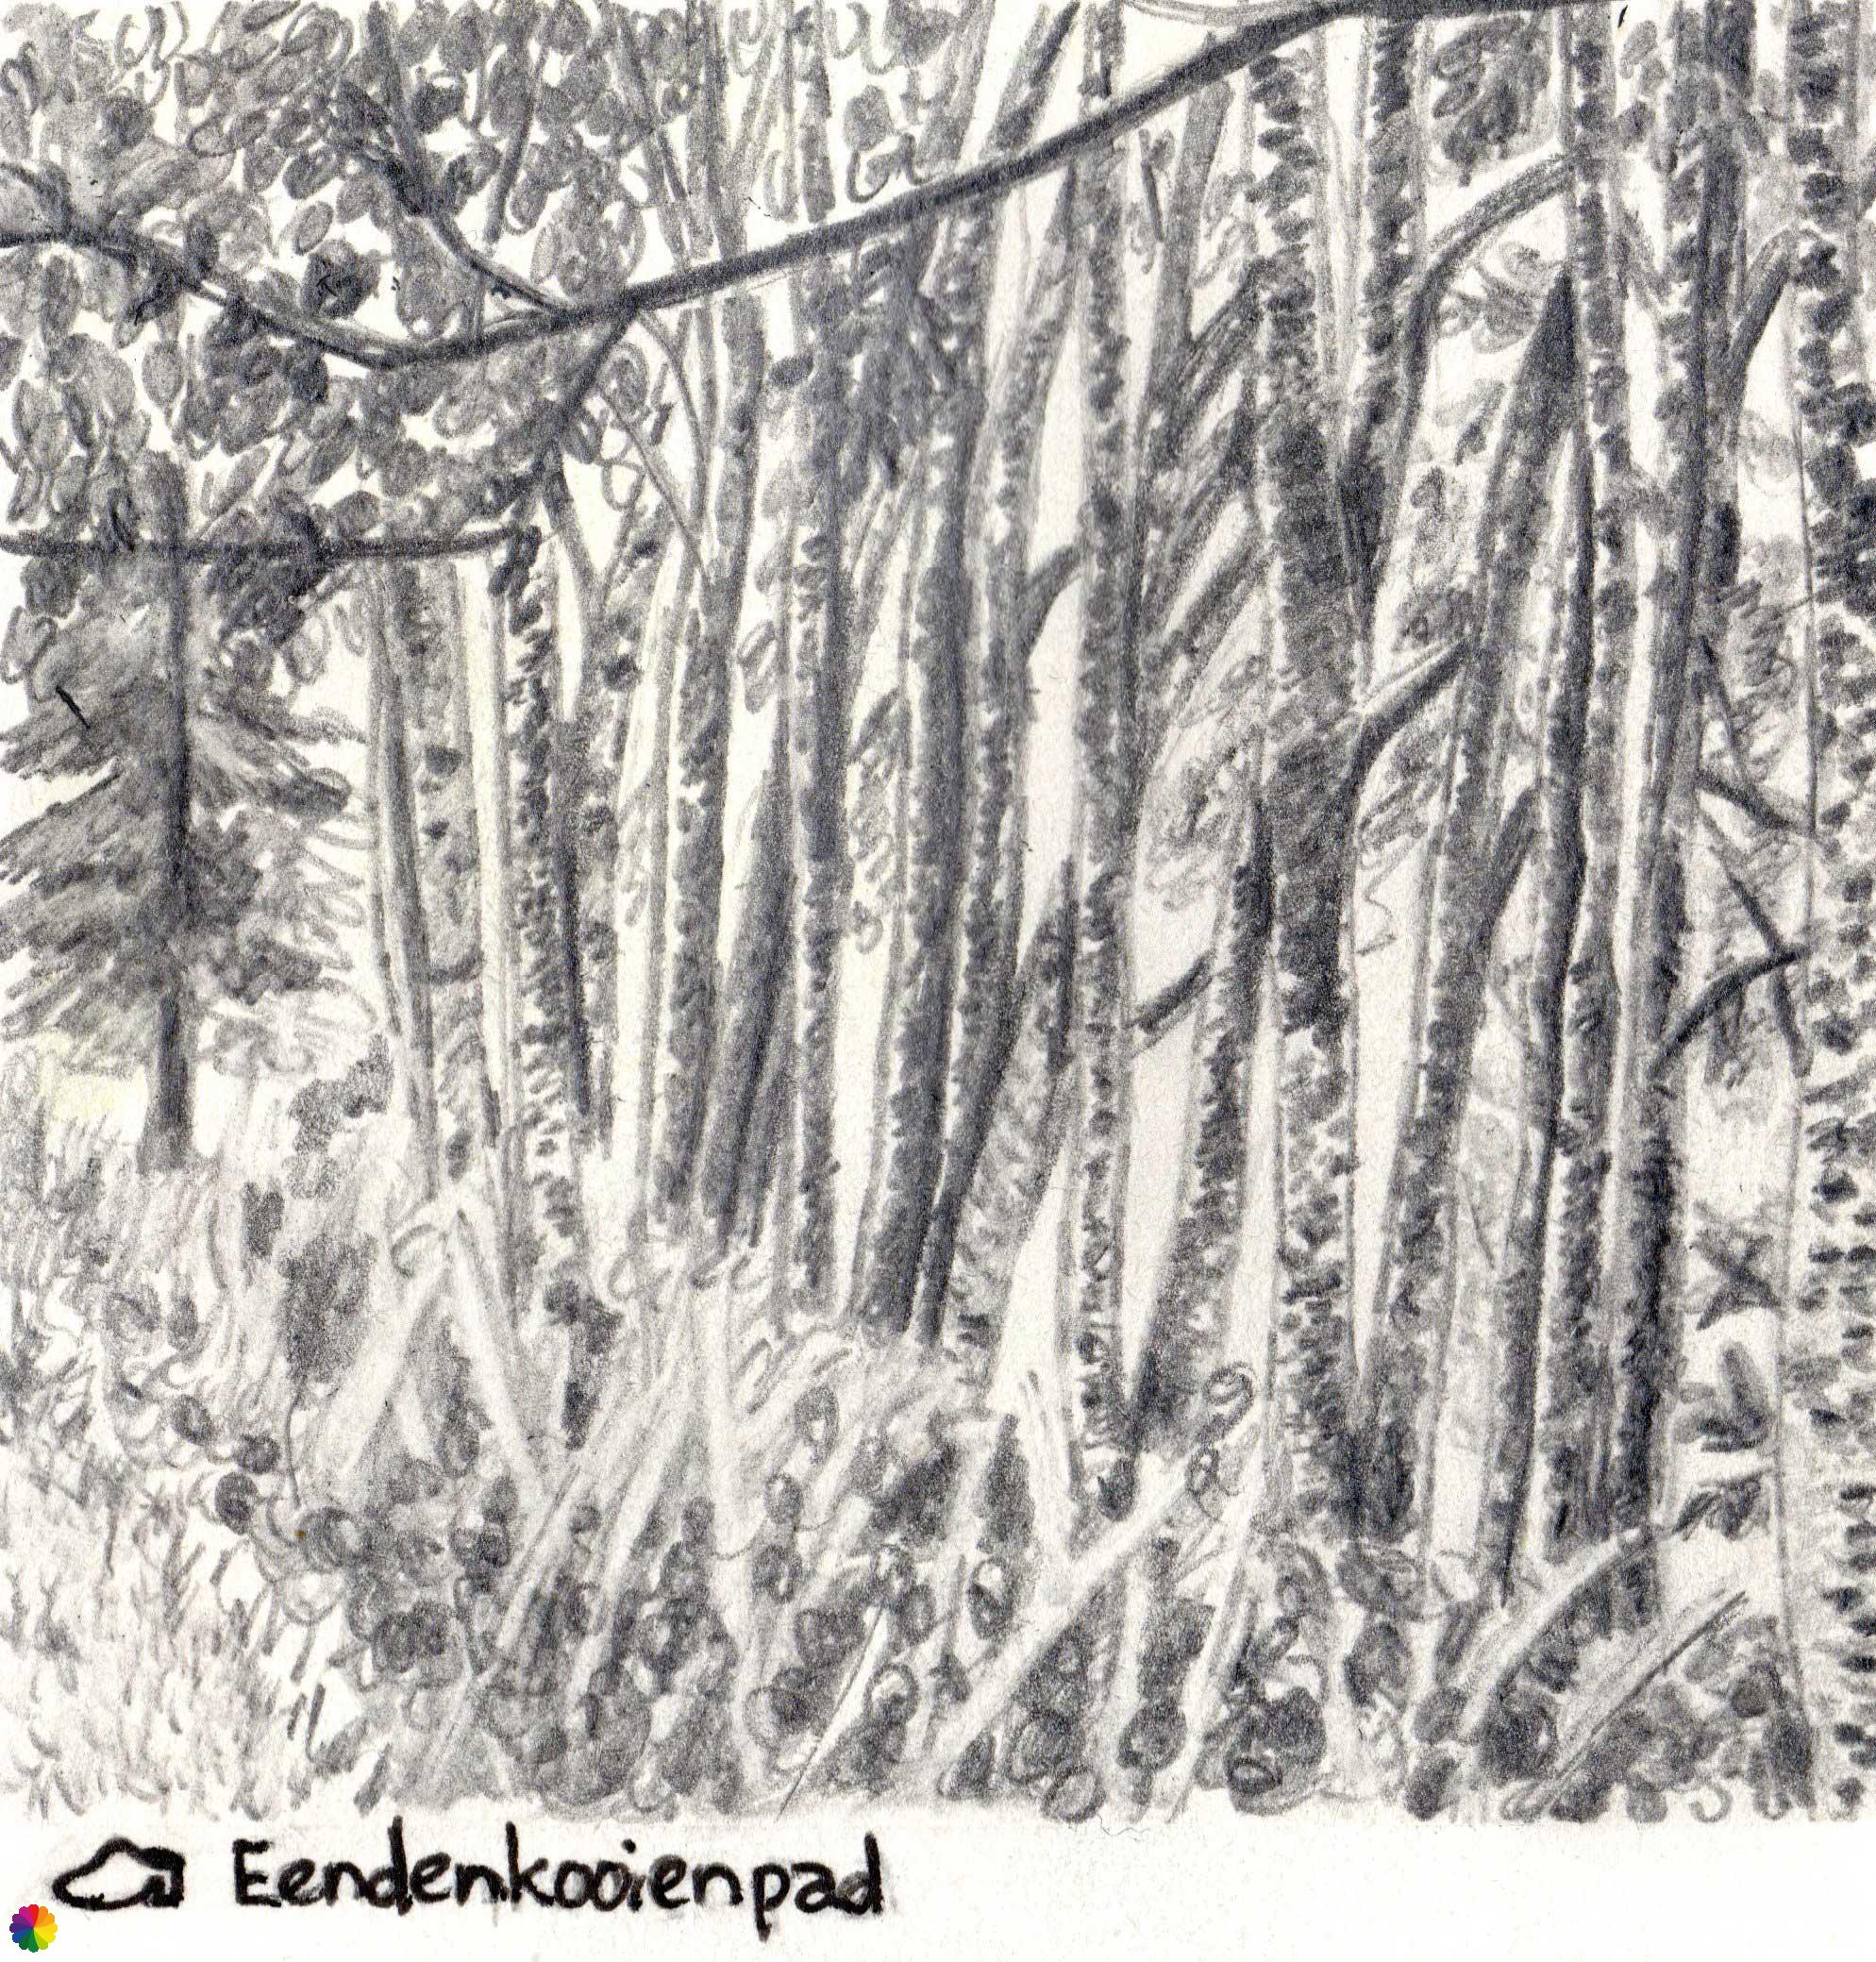 Sketch trees along the Noordzijdsekade on Duck decoy trail